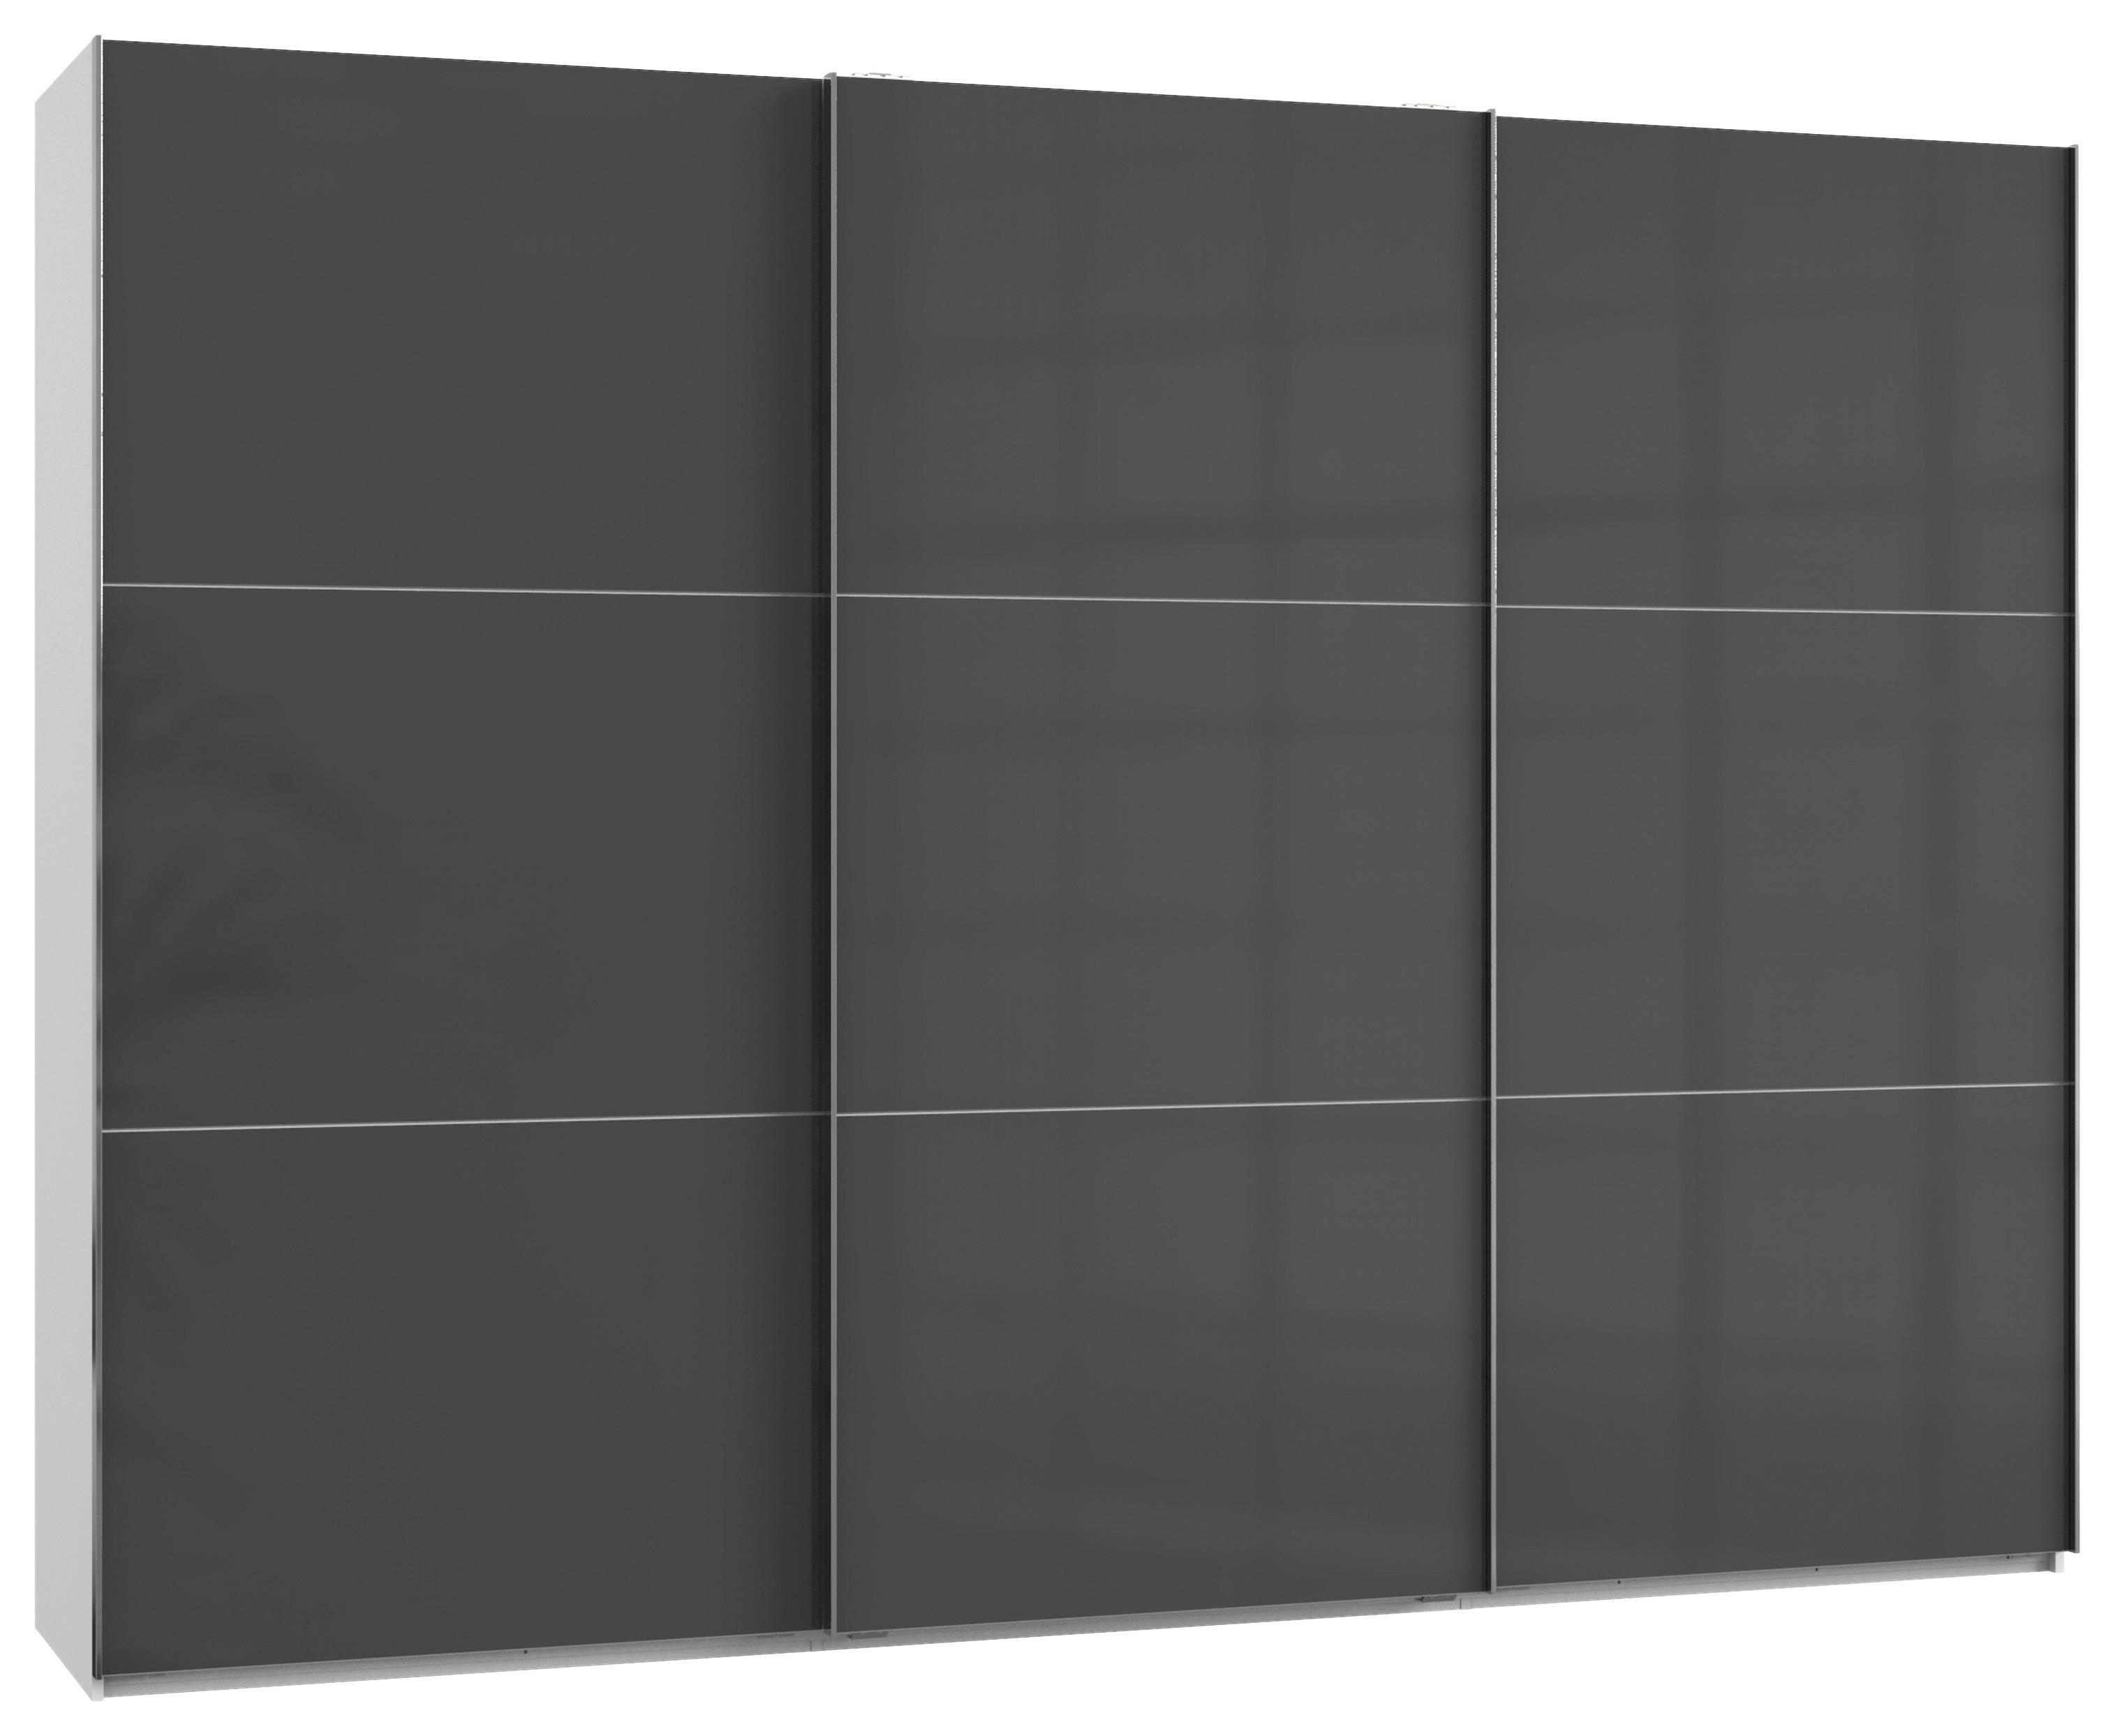 SCHWEBETÜRENSCHRANK 3-türig Grau, Weiß  - Chromfarben/Weiß, MODERN (300/216/65cm) - MID.YOU